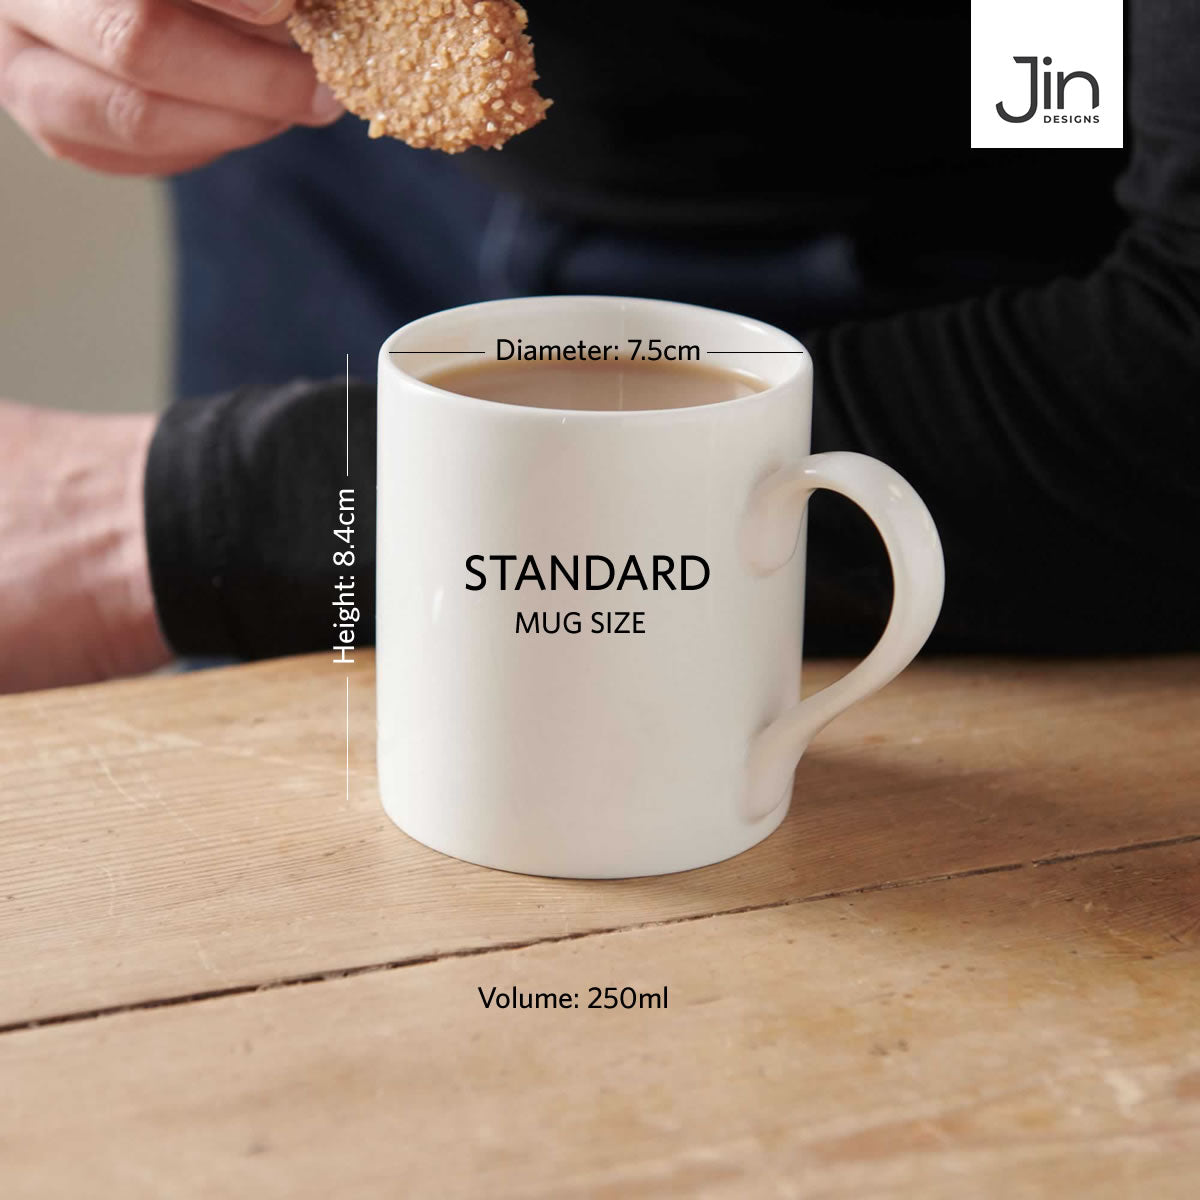 Jin Designs Standard Size Mug